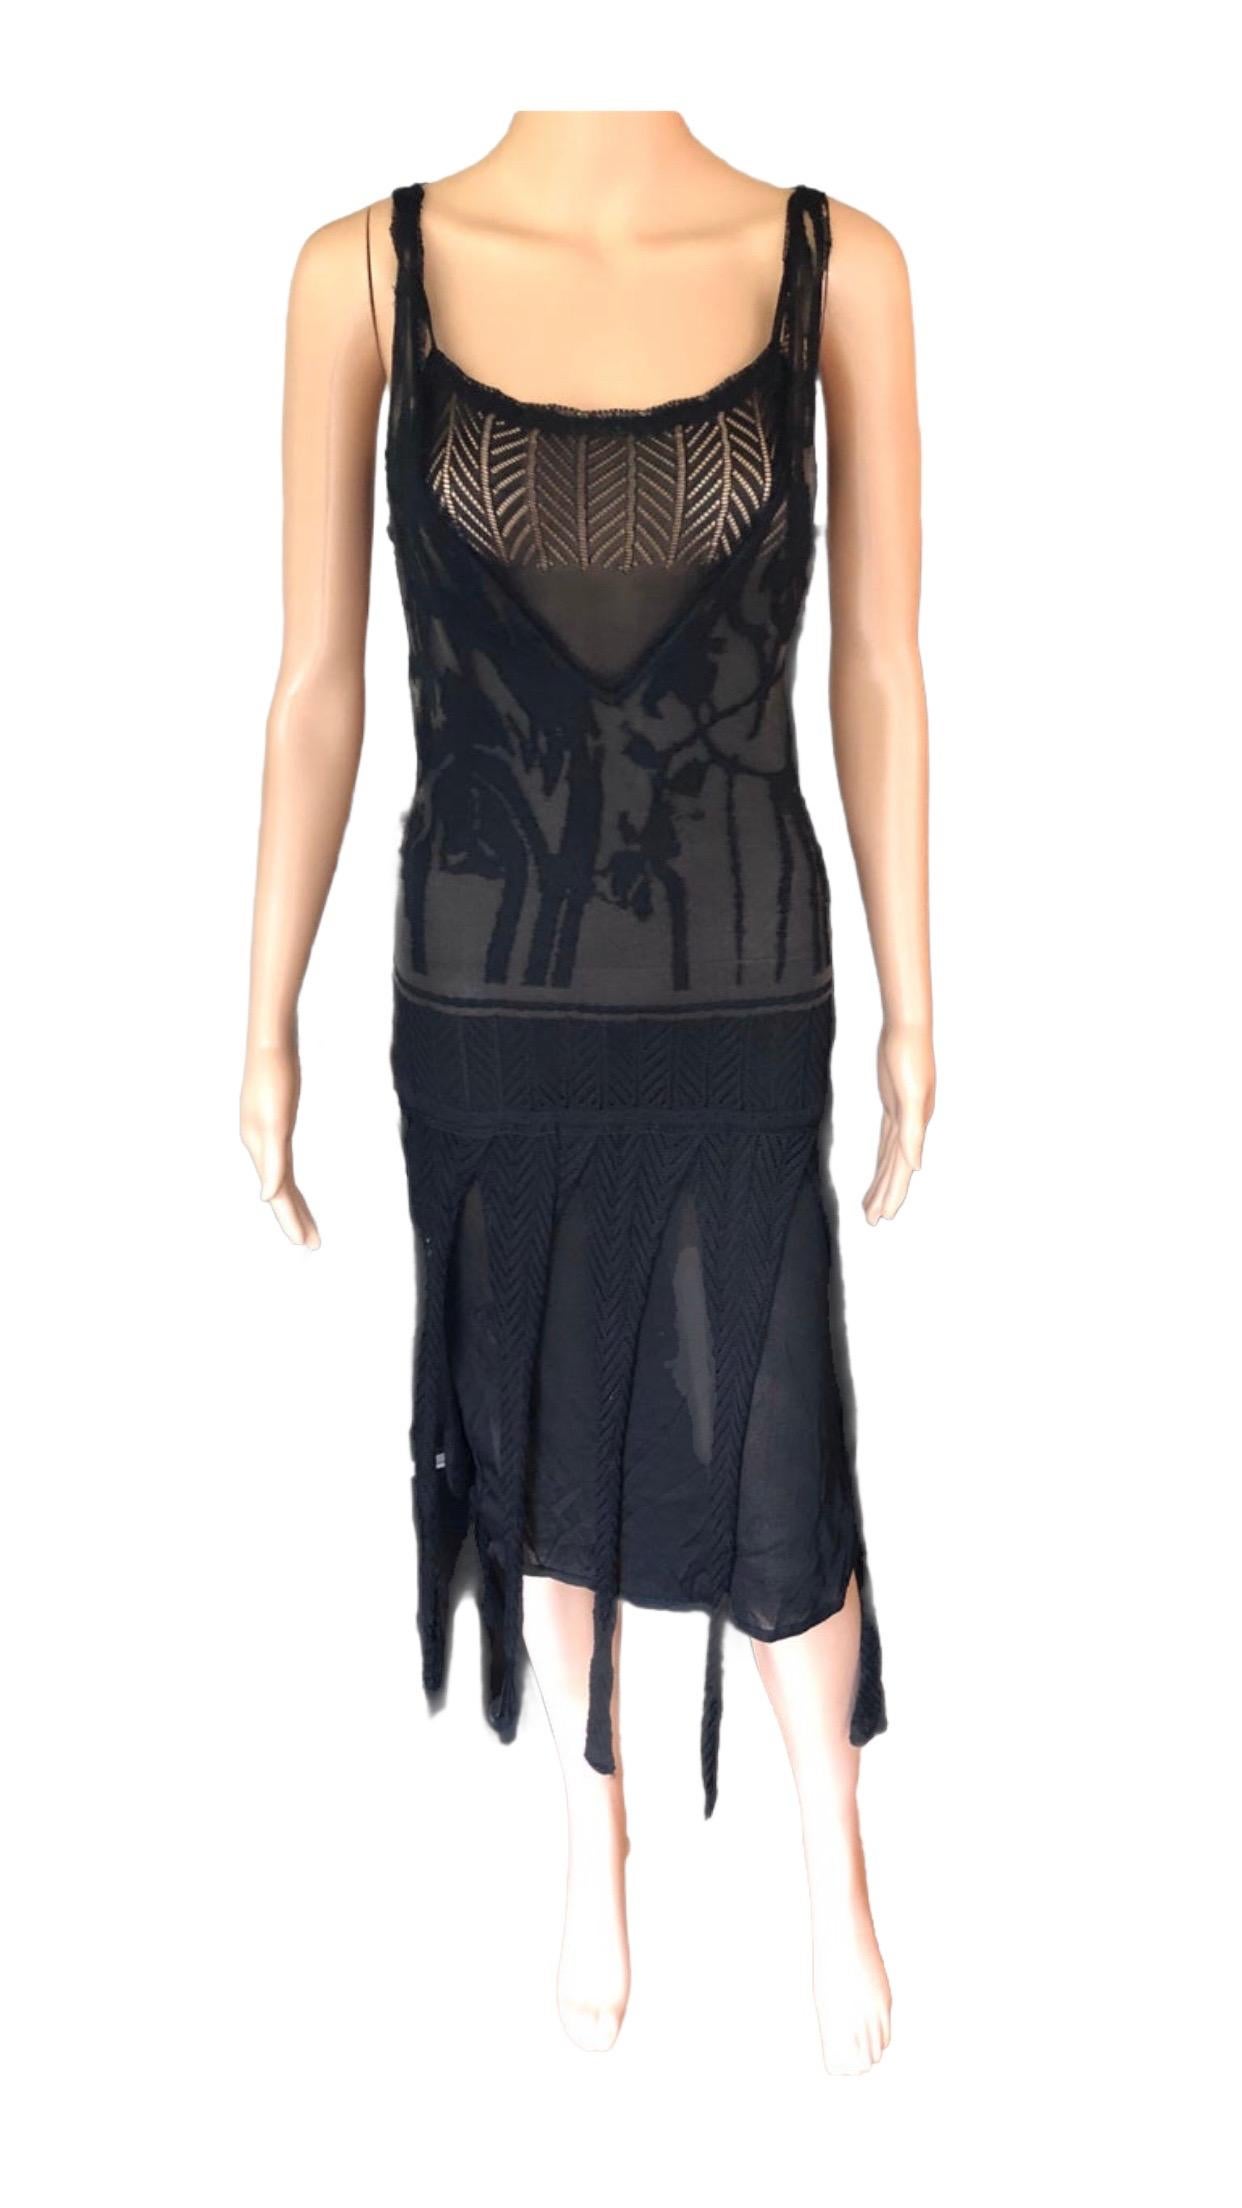 Christian Lacroix Vintage Semi-Sheer Crochet Mesh Knit Fringed Black Dress For Sale 1